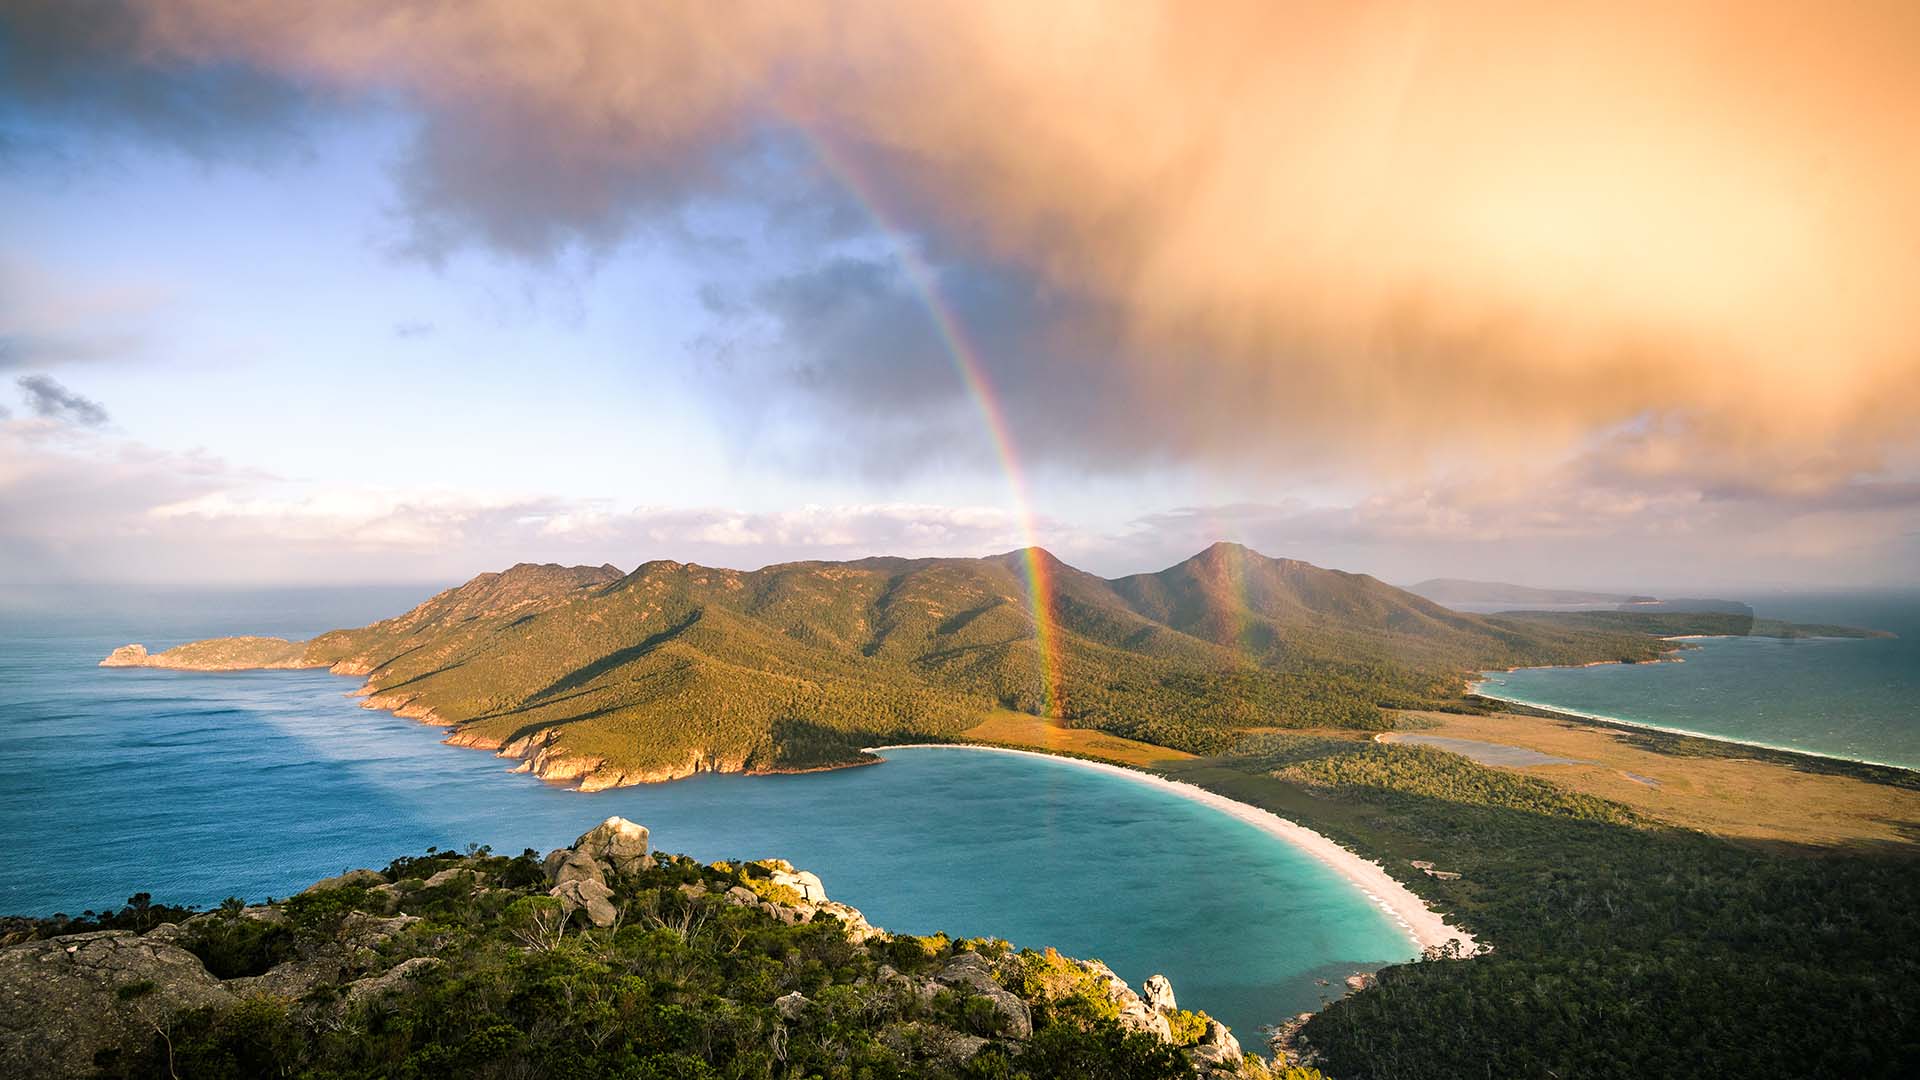 Arial view of rainbow over Tasmania, Australia